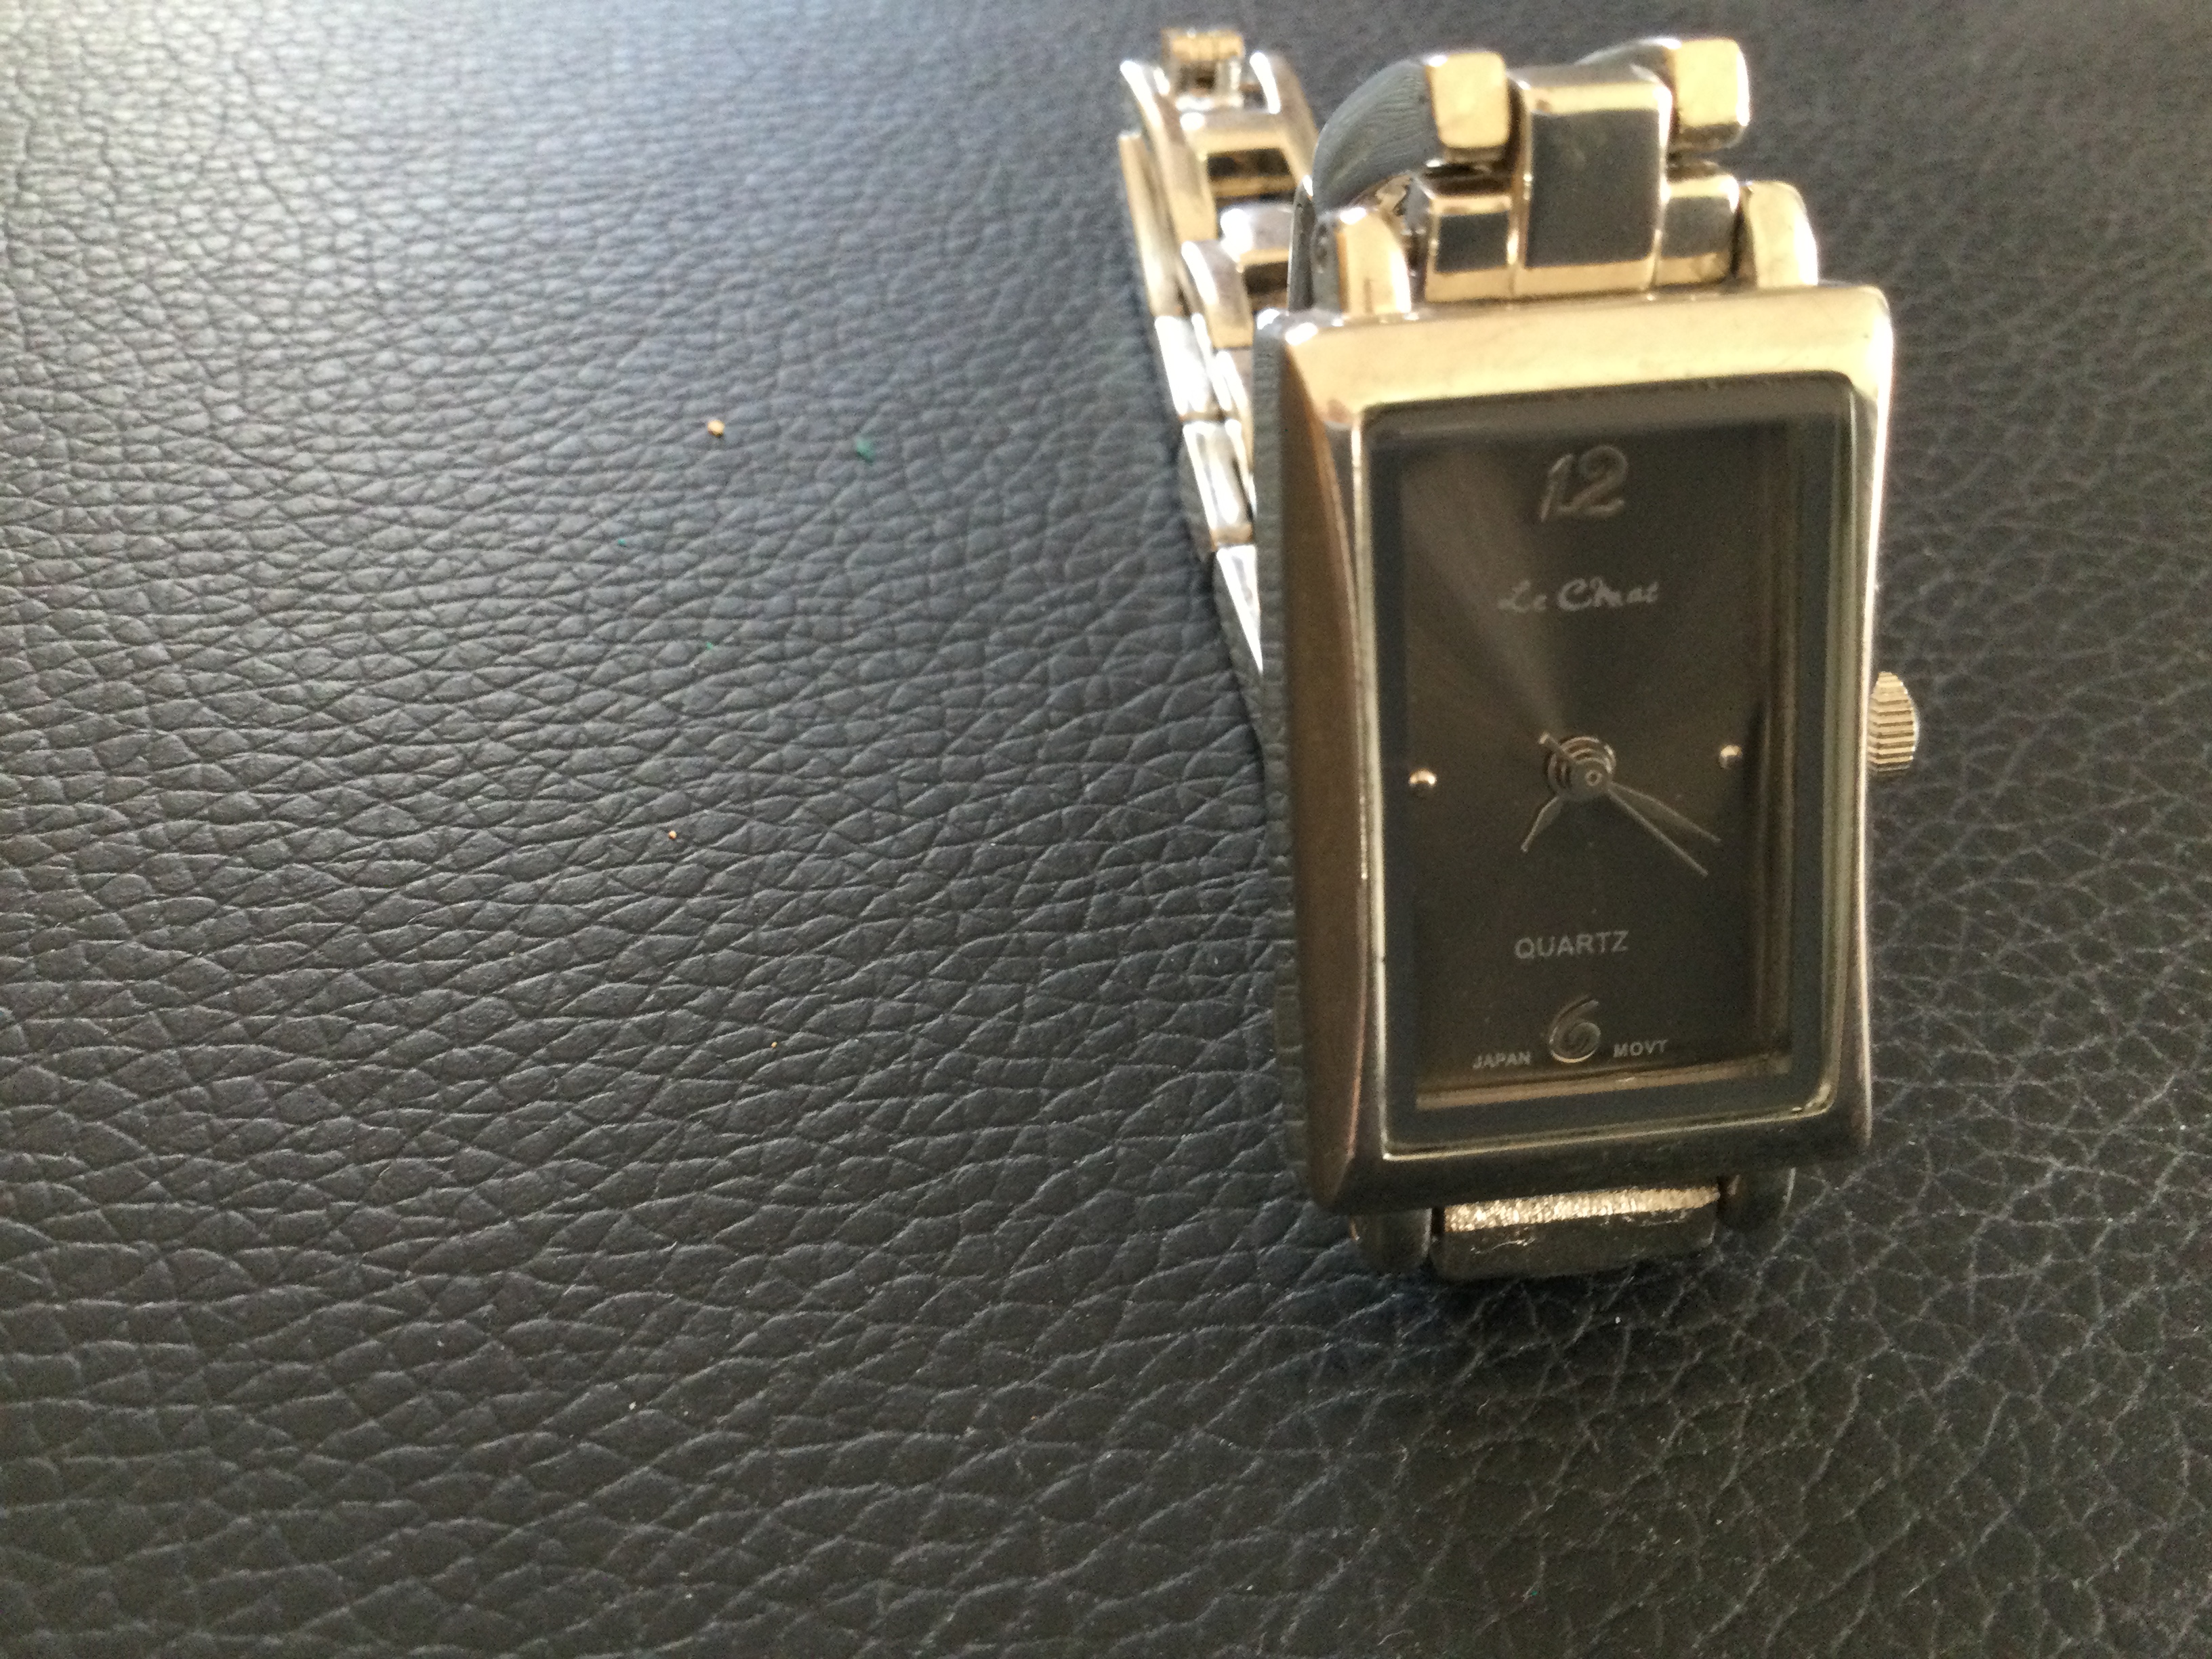 Le Chat Quartz Ladies Wristwatch (GS16) A really nice little Le Chat Quartz Ladies wristwatch. - Image 2 of 5